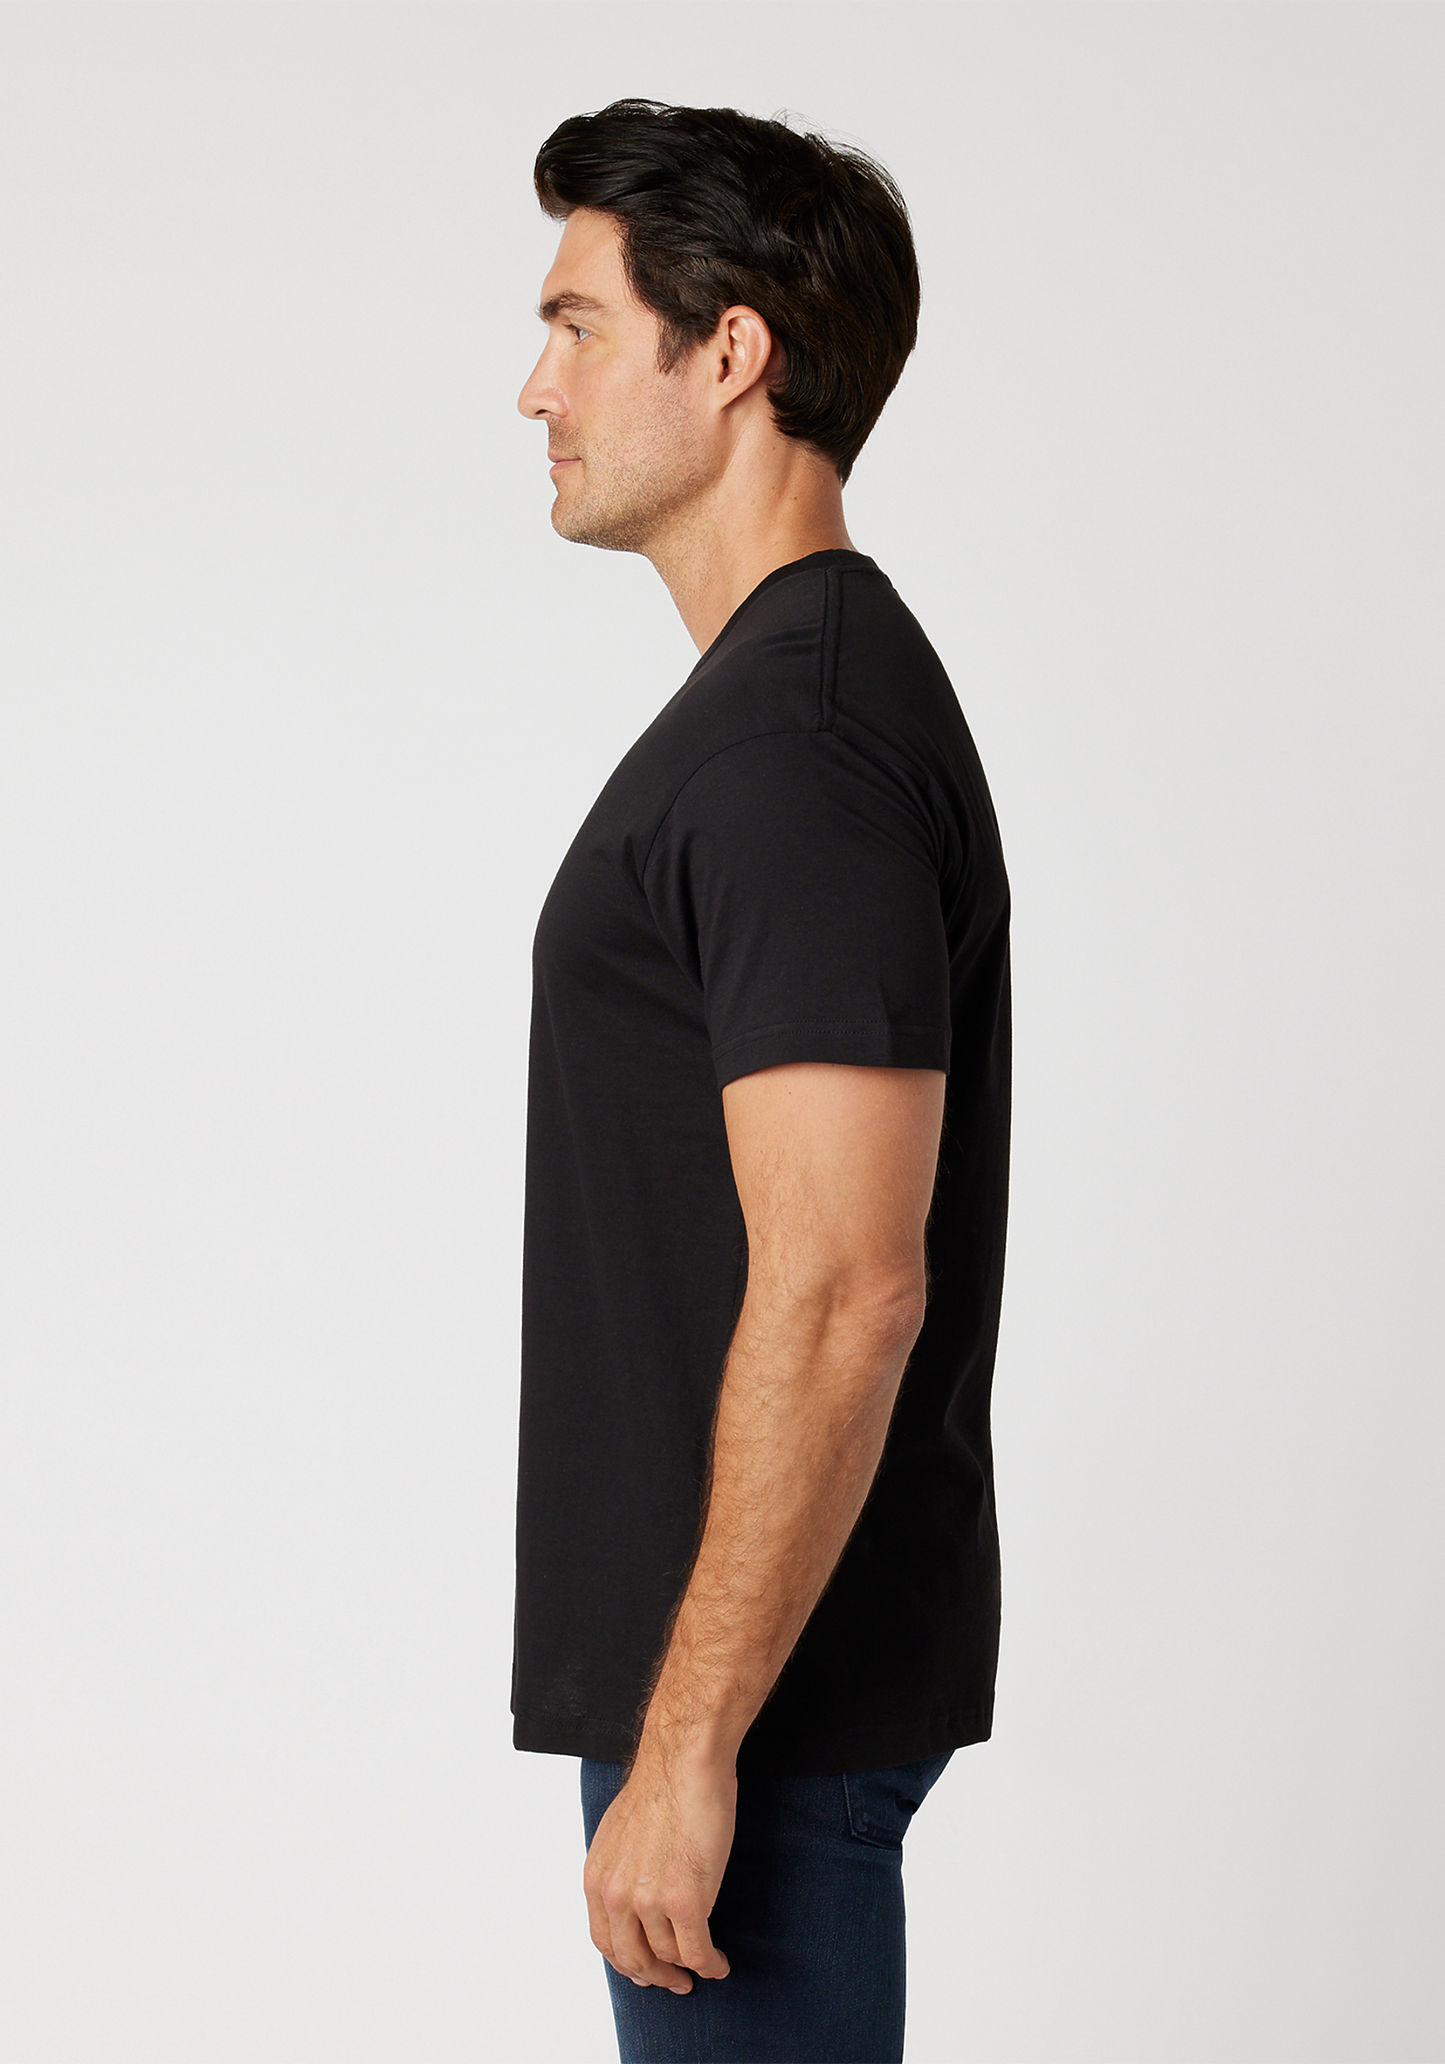 Couchumbia Unisex T-Shirt (Black)